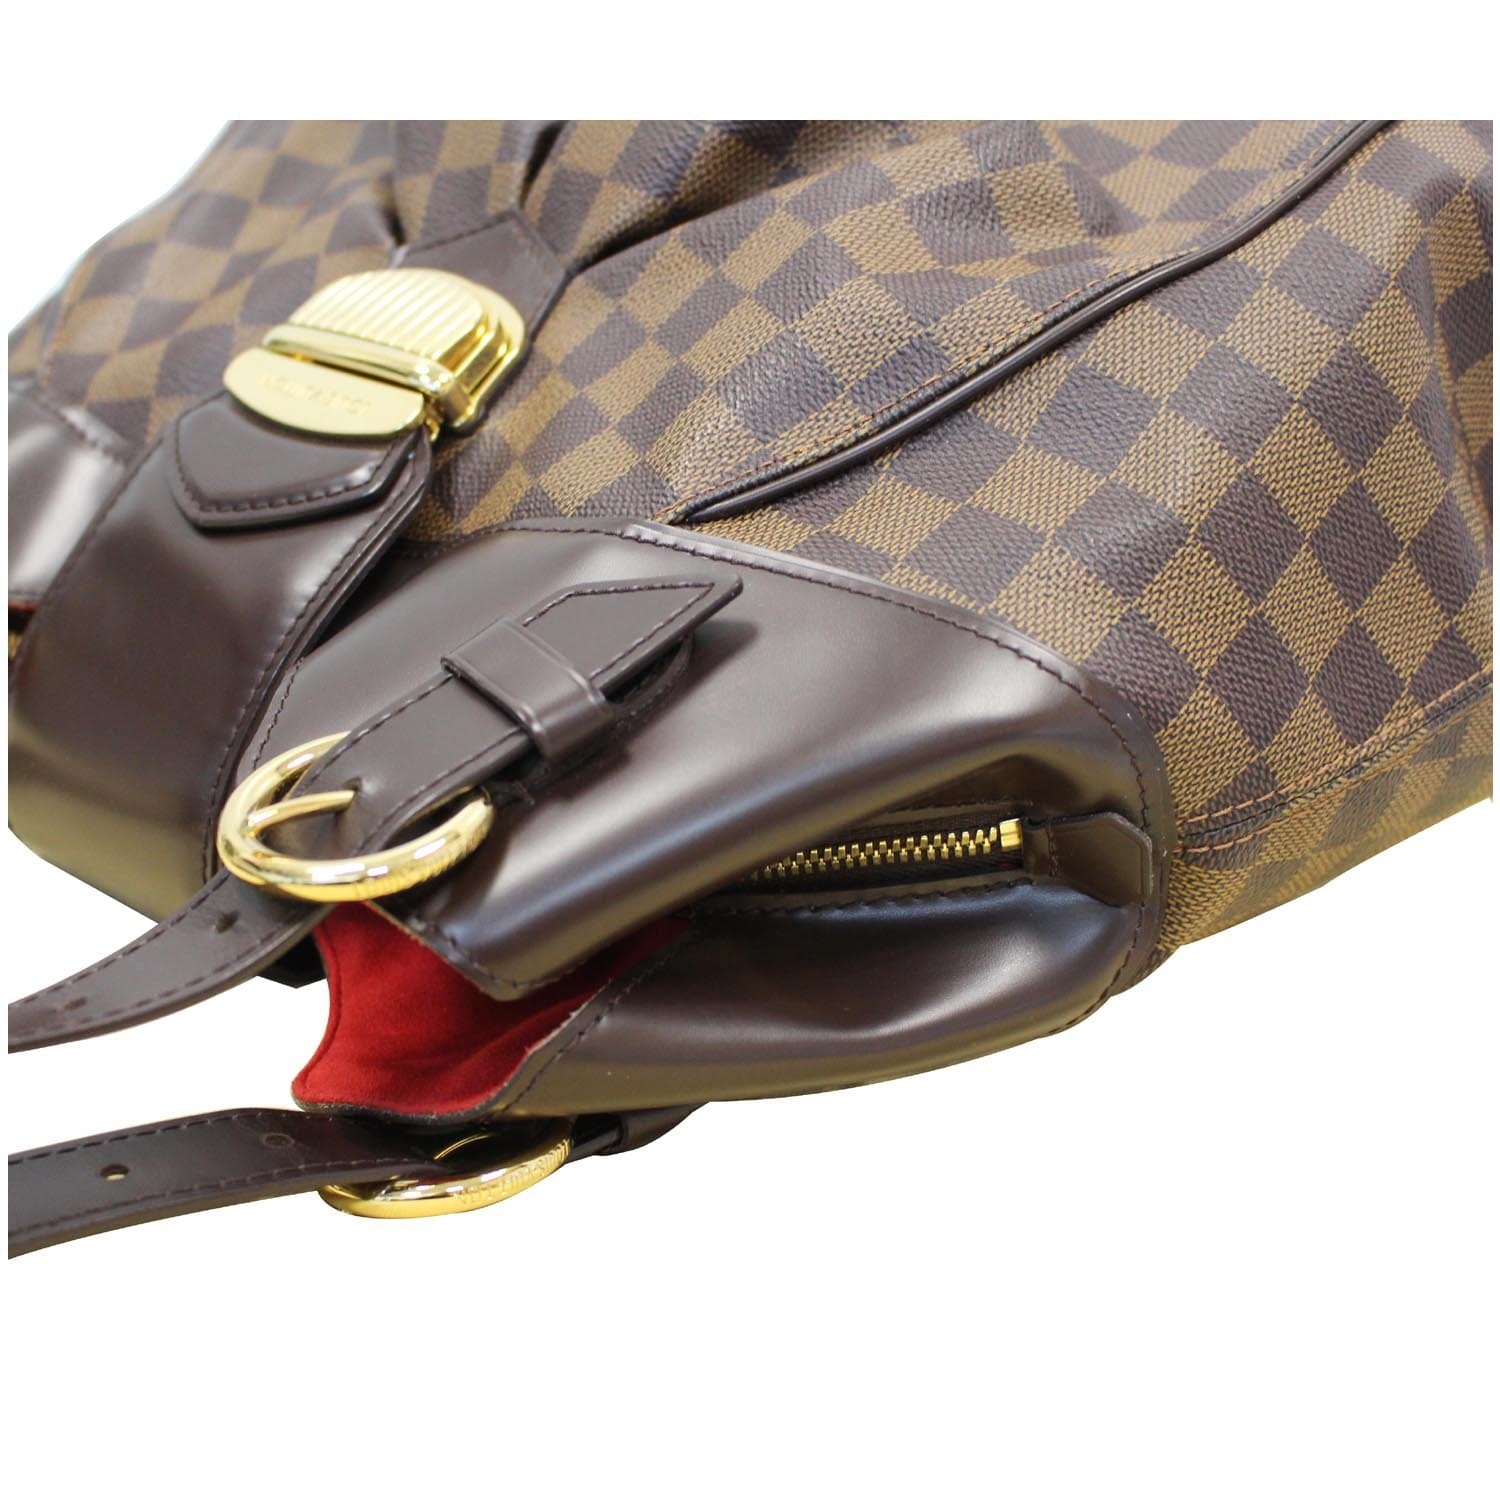 Louis Vuitton Sistina GM Damier Ebene shoulder bag